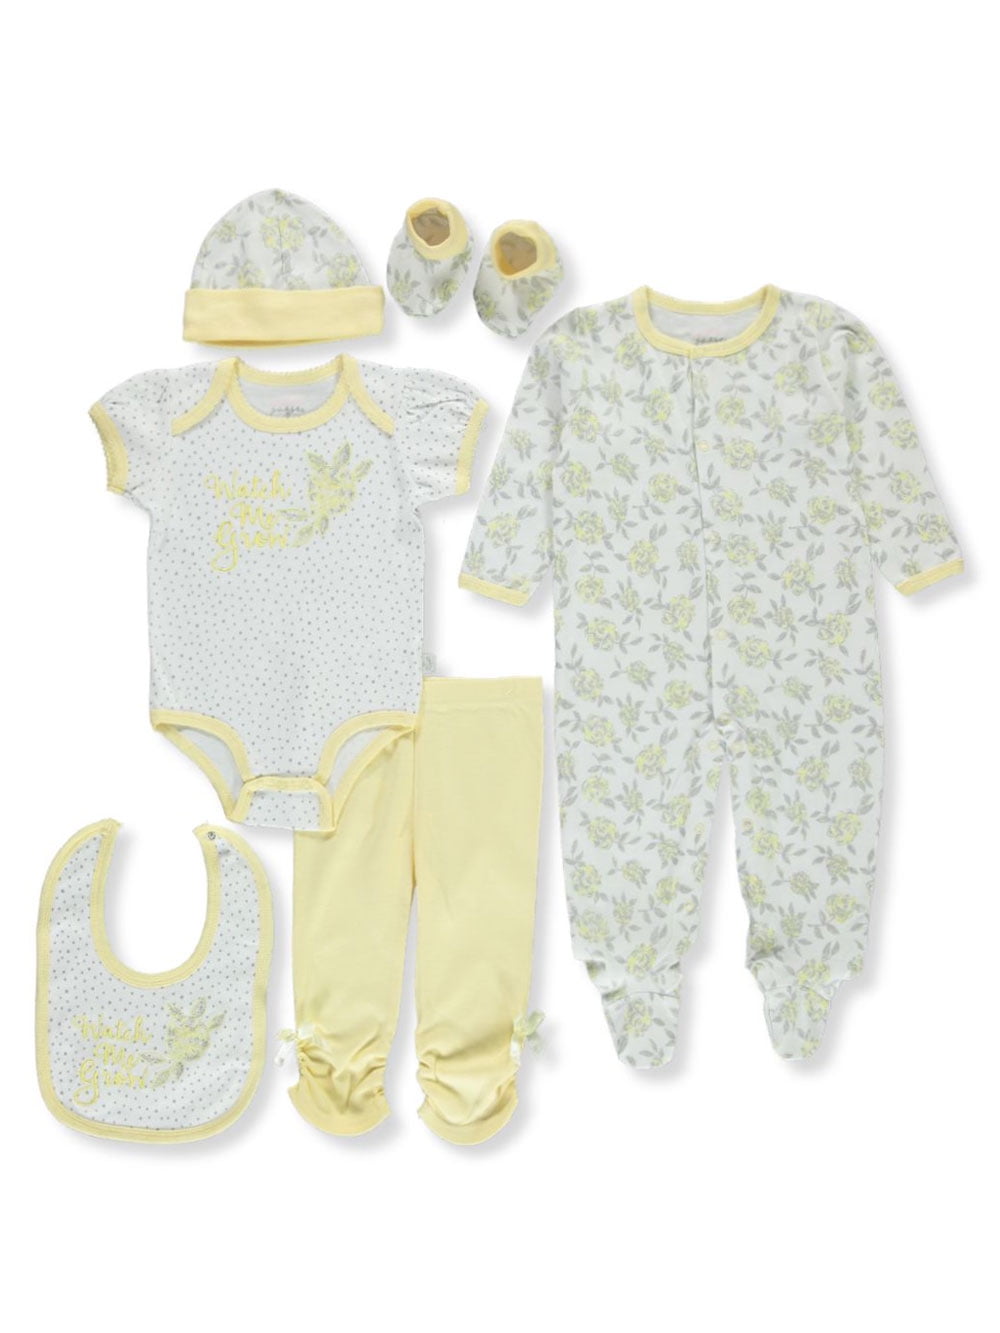 Baby Unisex Layette sleepsuit 5 piece set duck white Rock a bye NB 0-3 3-6 month